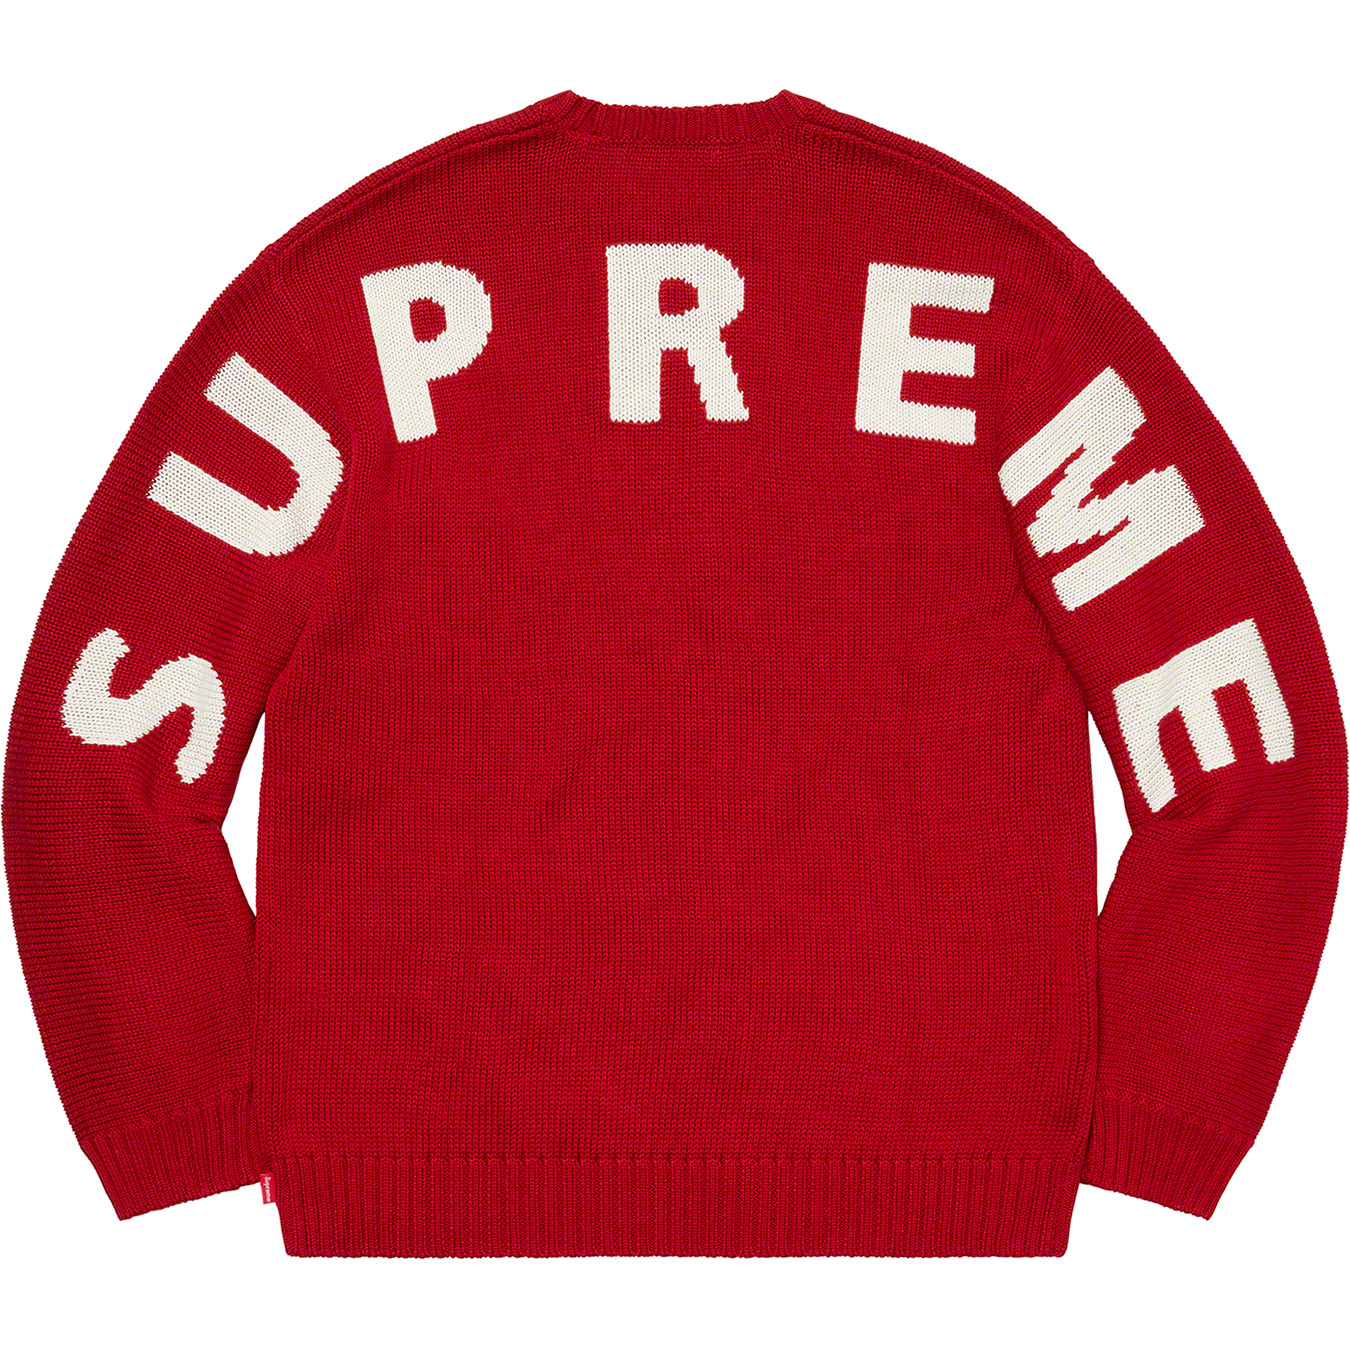 Supreme / Back logo sweaterこの機会に是非ご検討ください